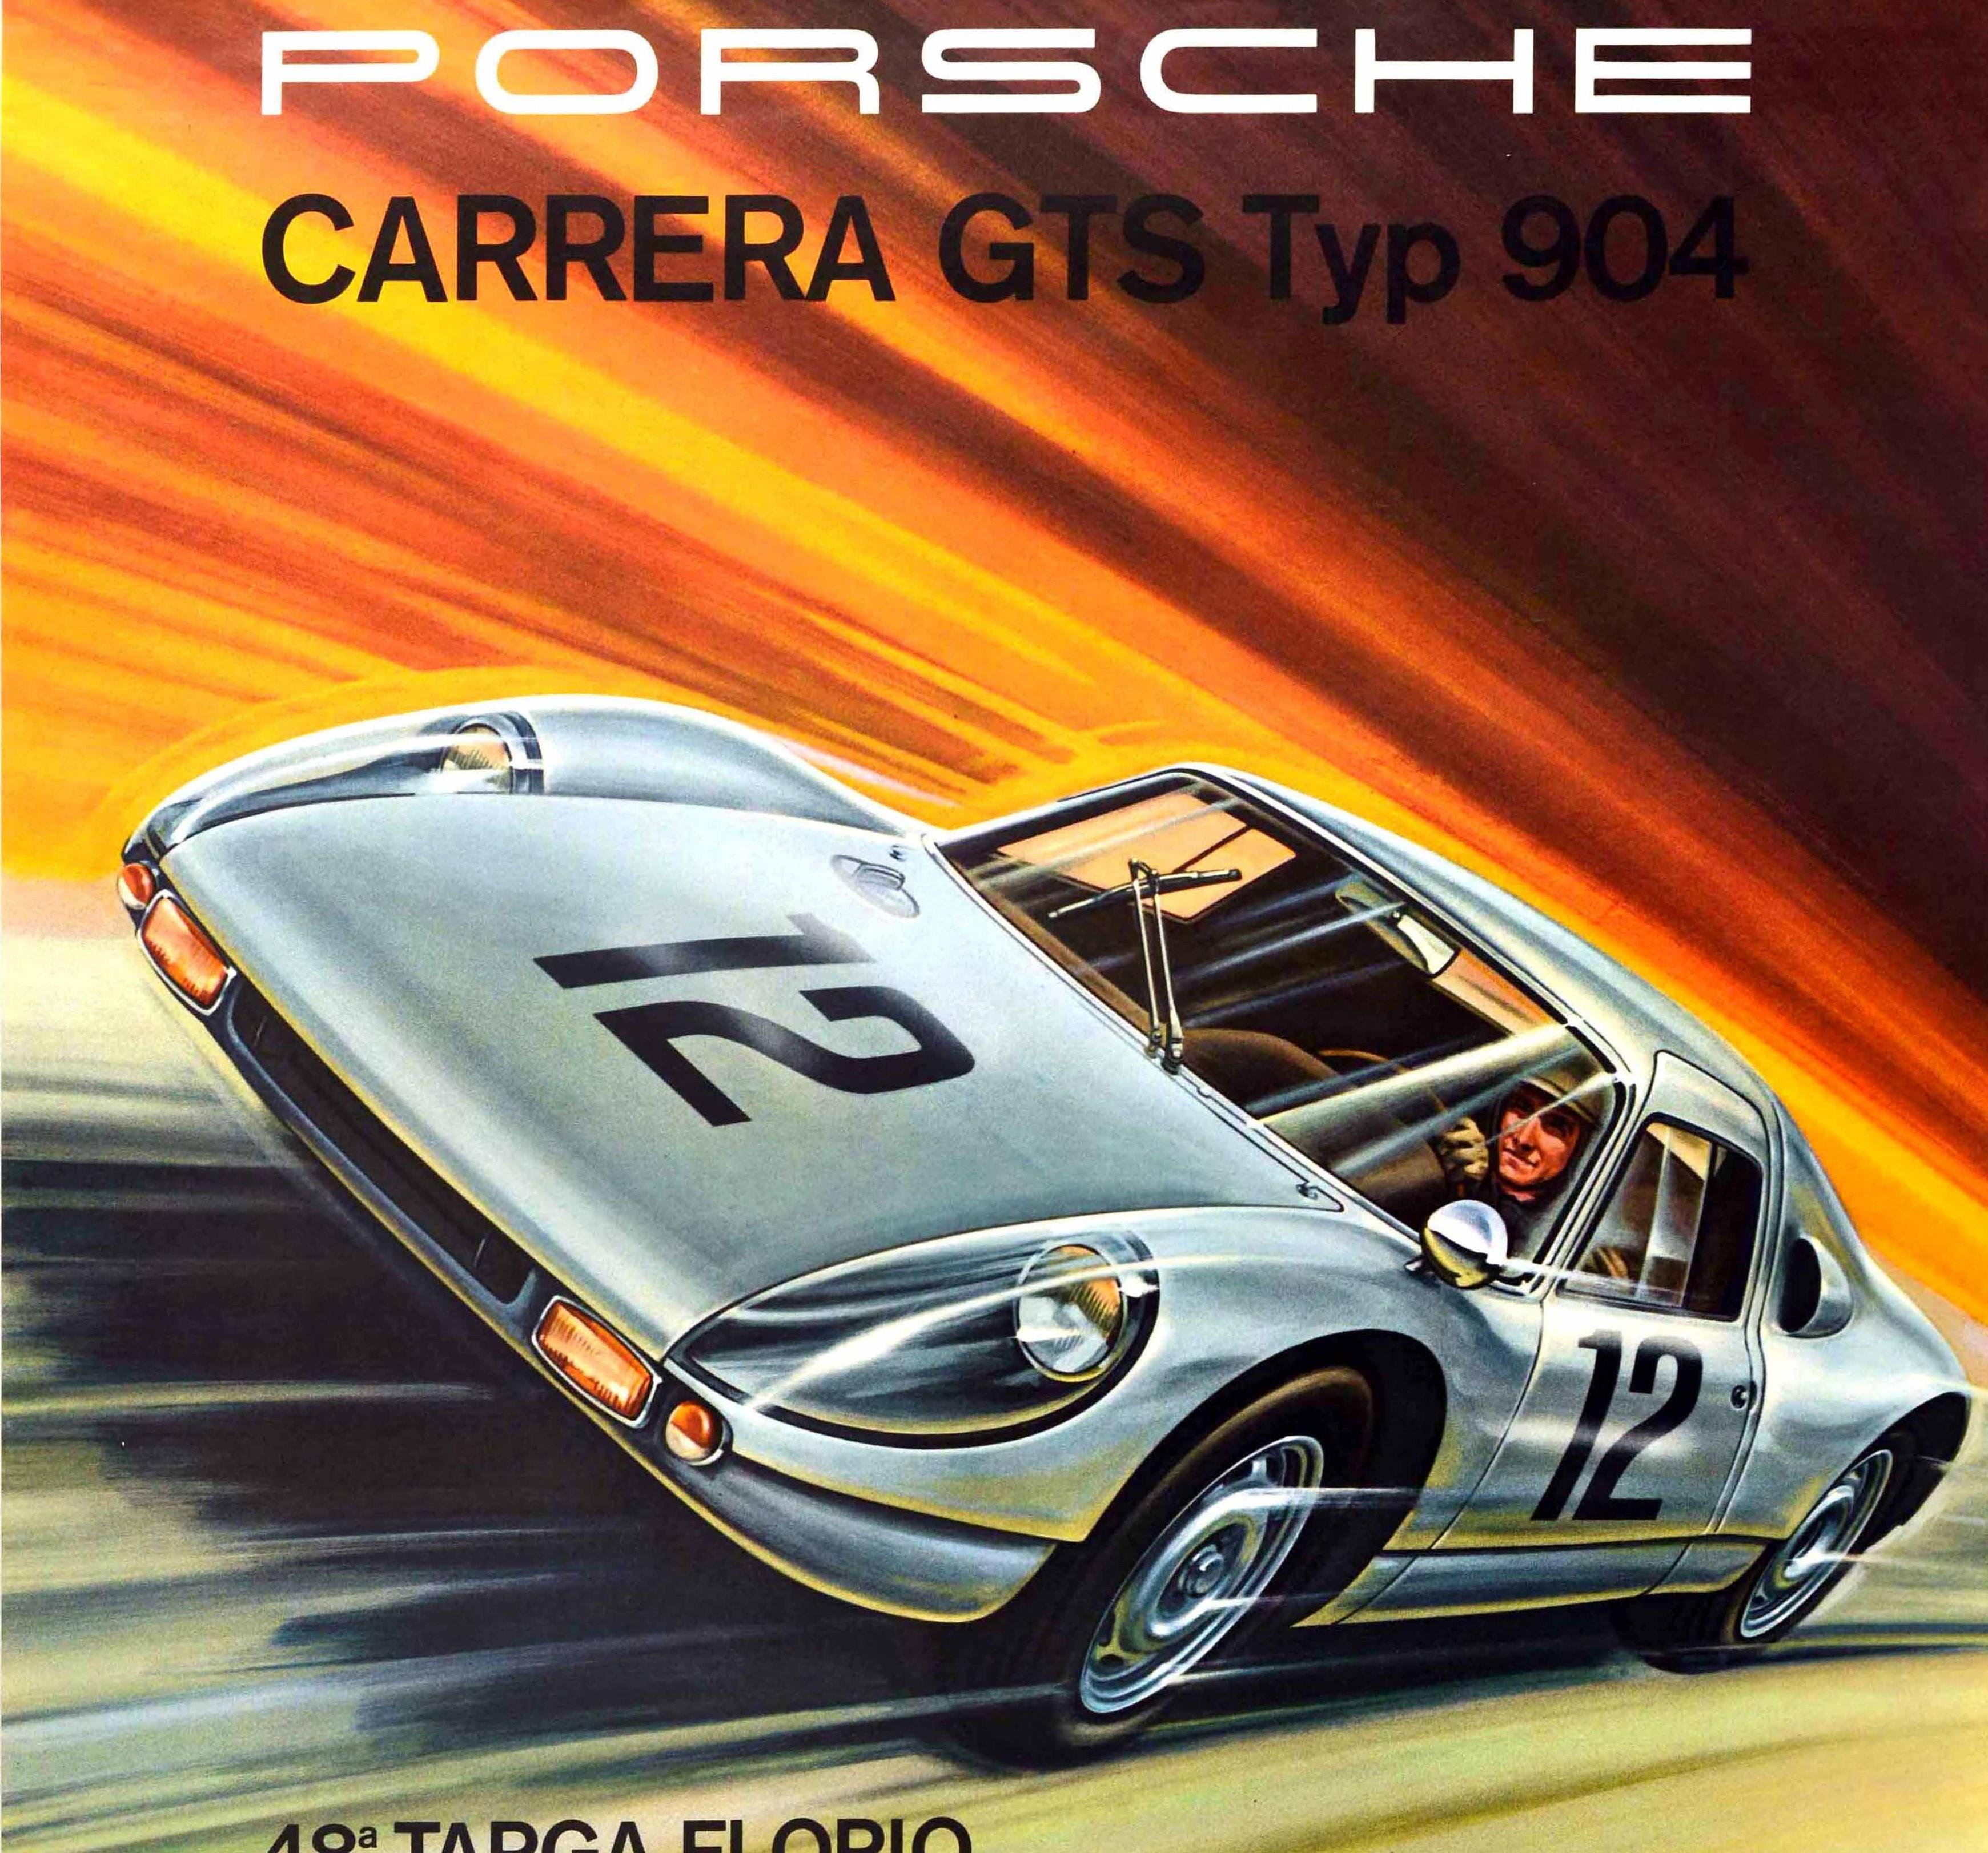 German Original Vintage Car Poster Porsche Carrera GTS Typ 904 Auto Racing Motor Sport